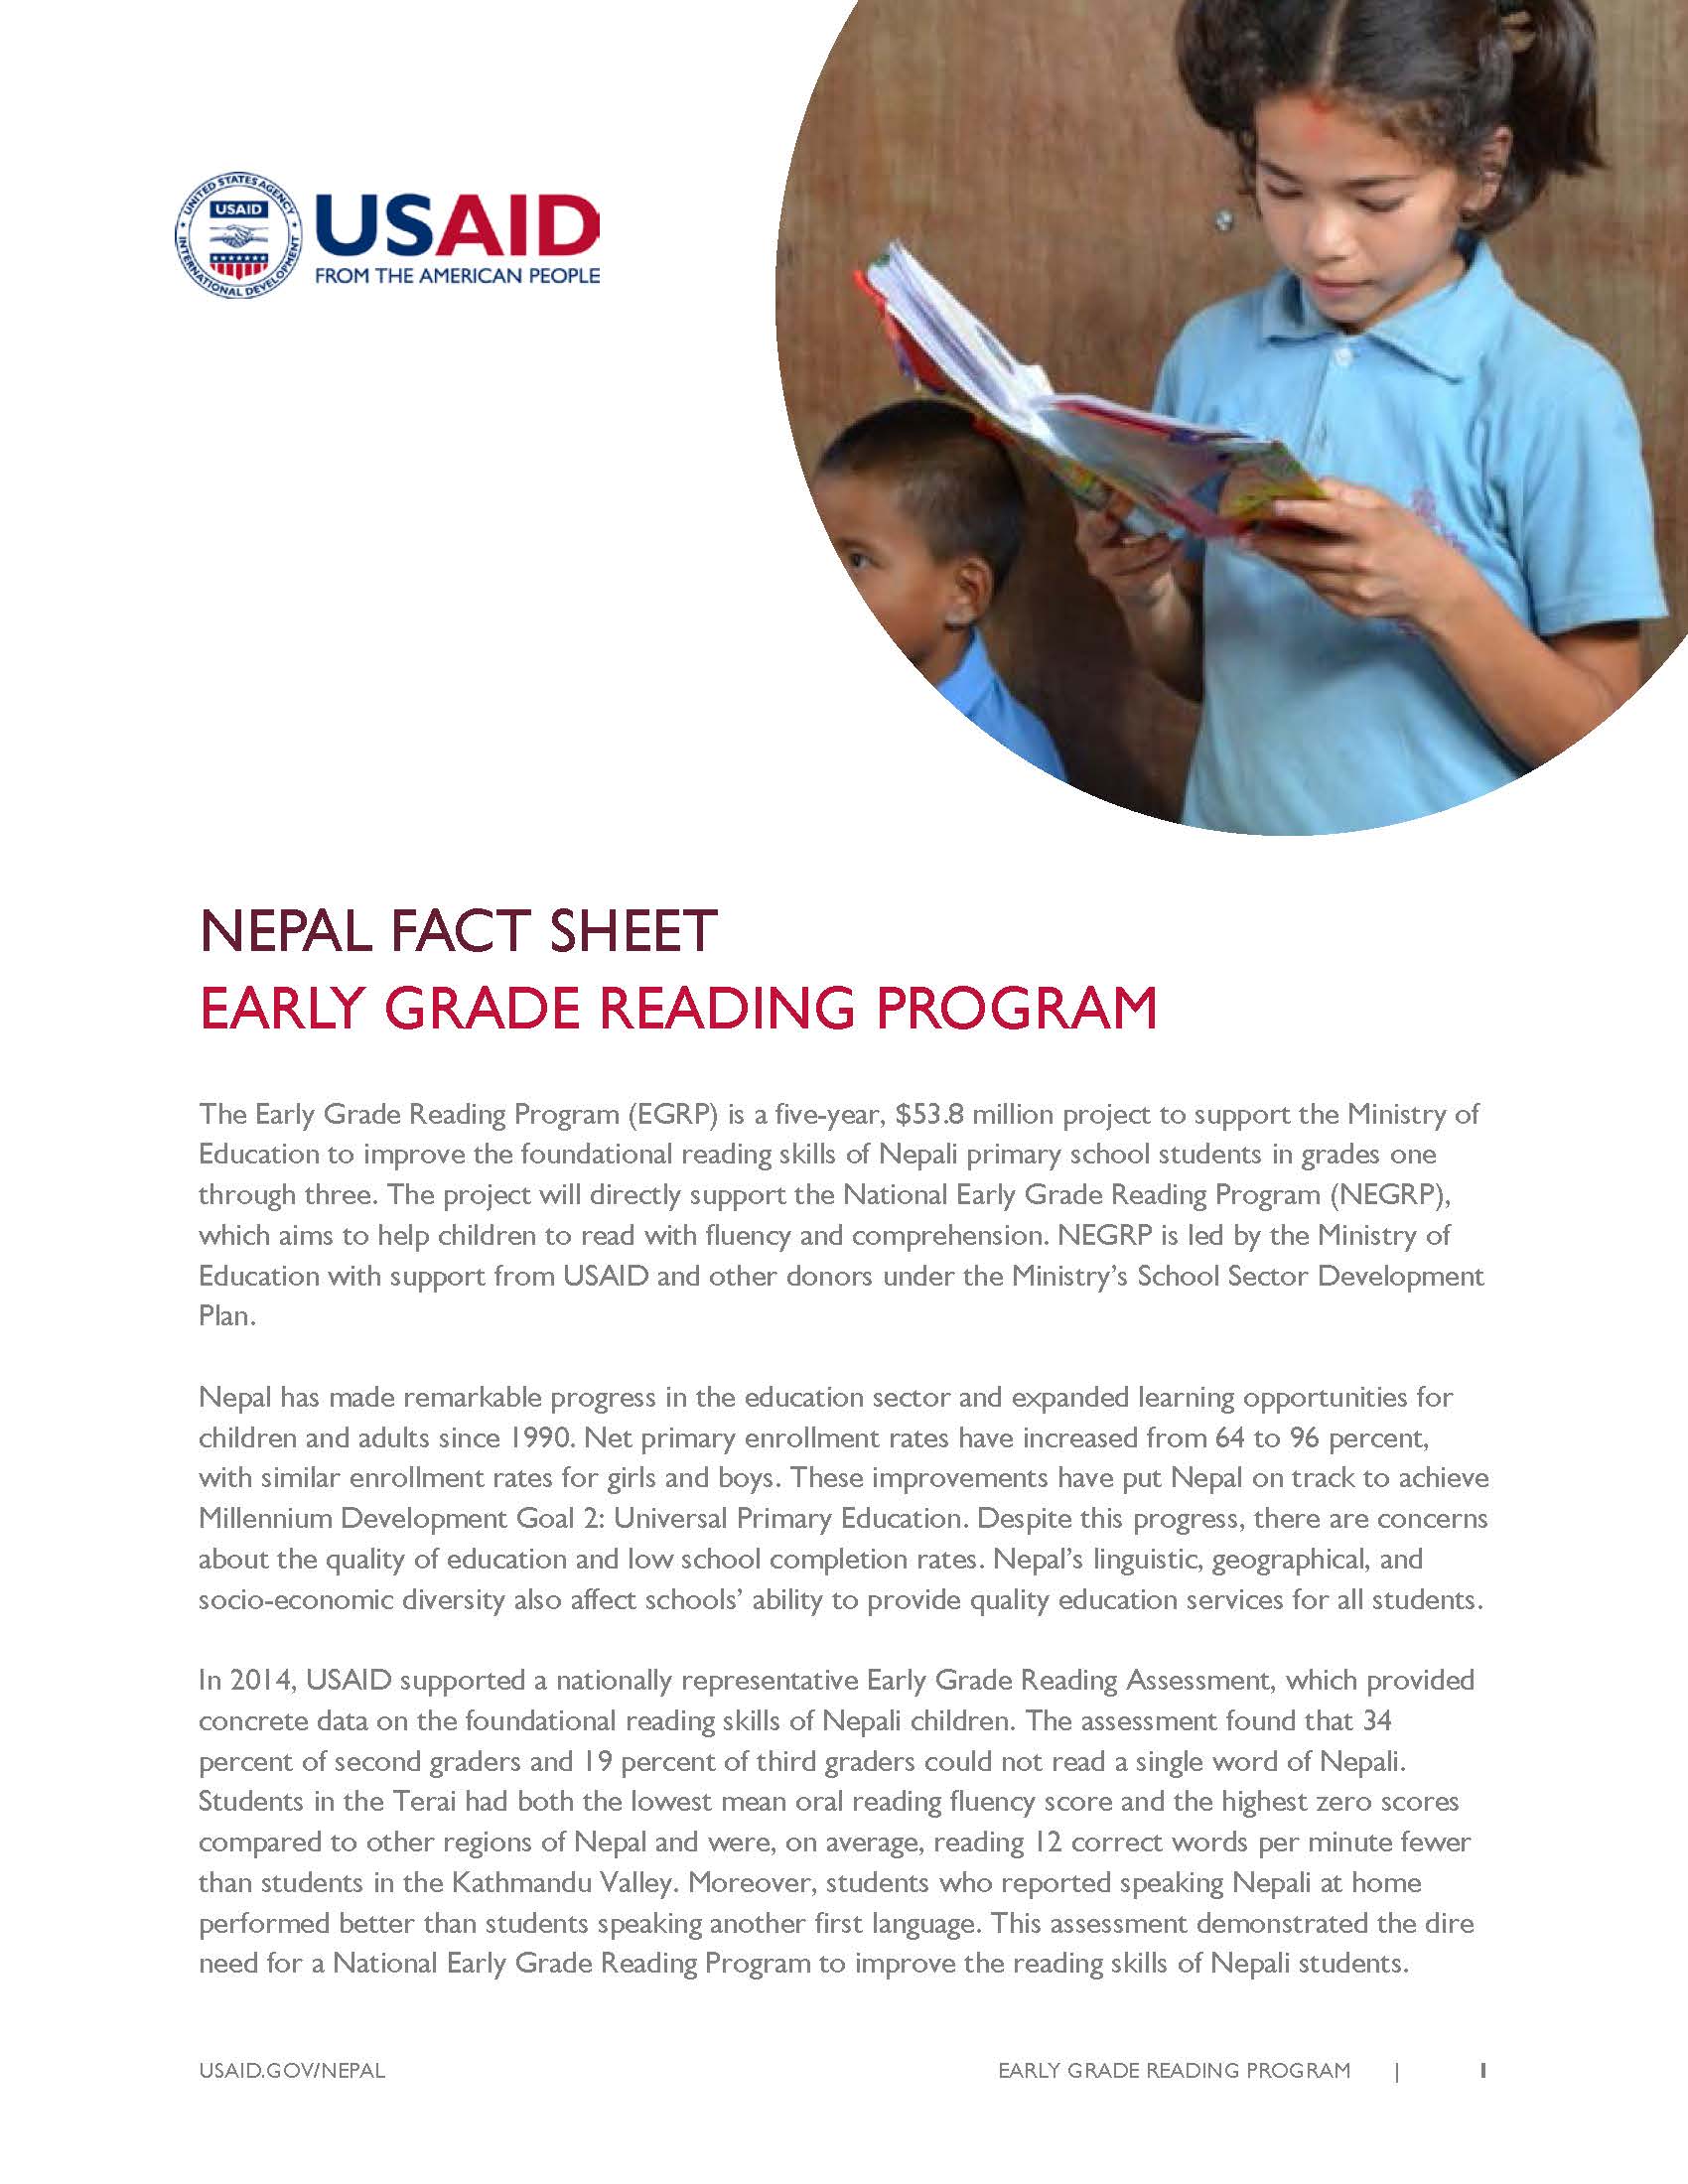 Factsheet : The Early Grade Reading Program (EGRP)